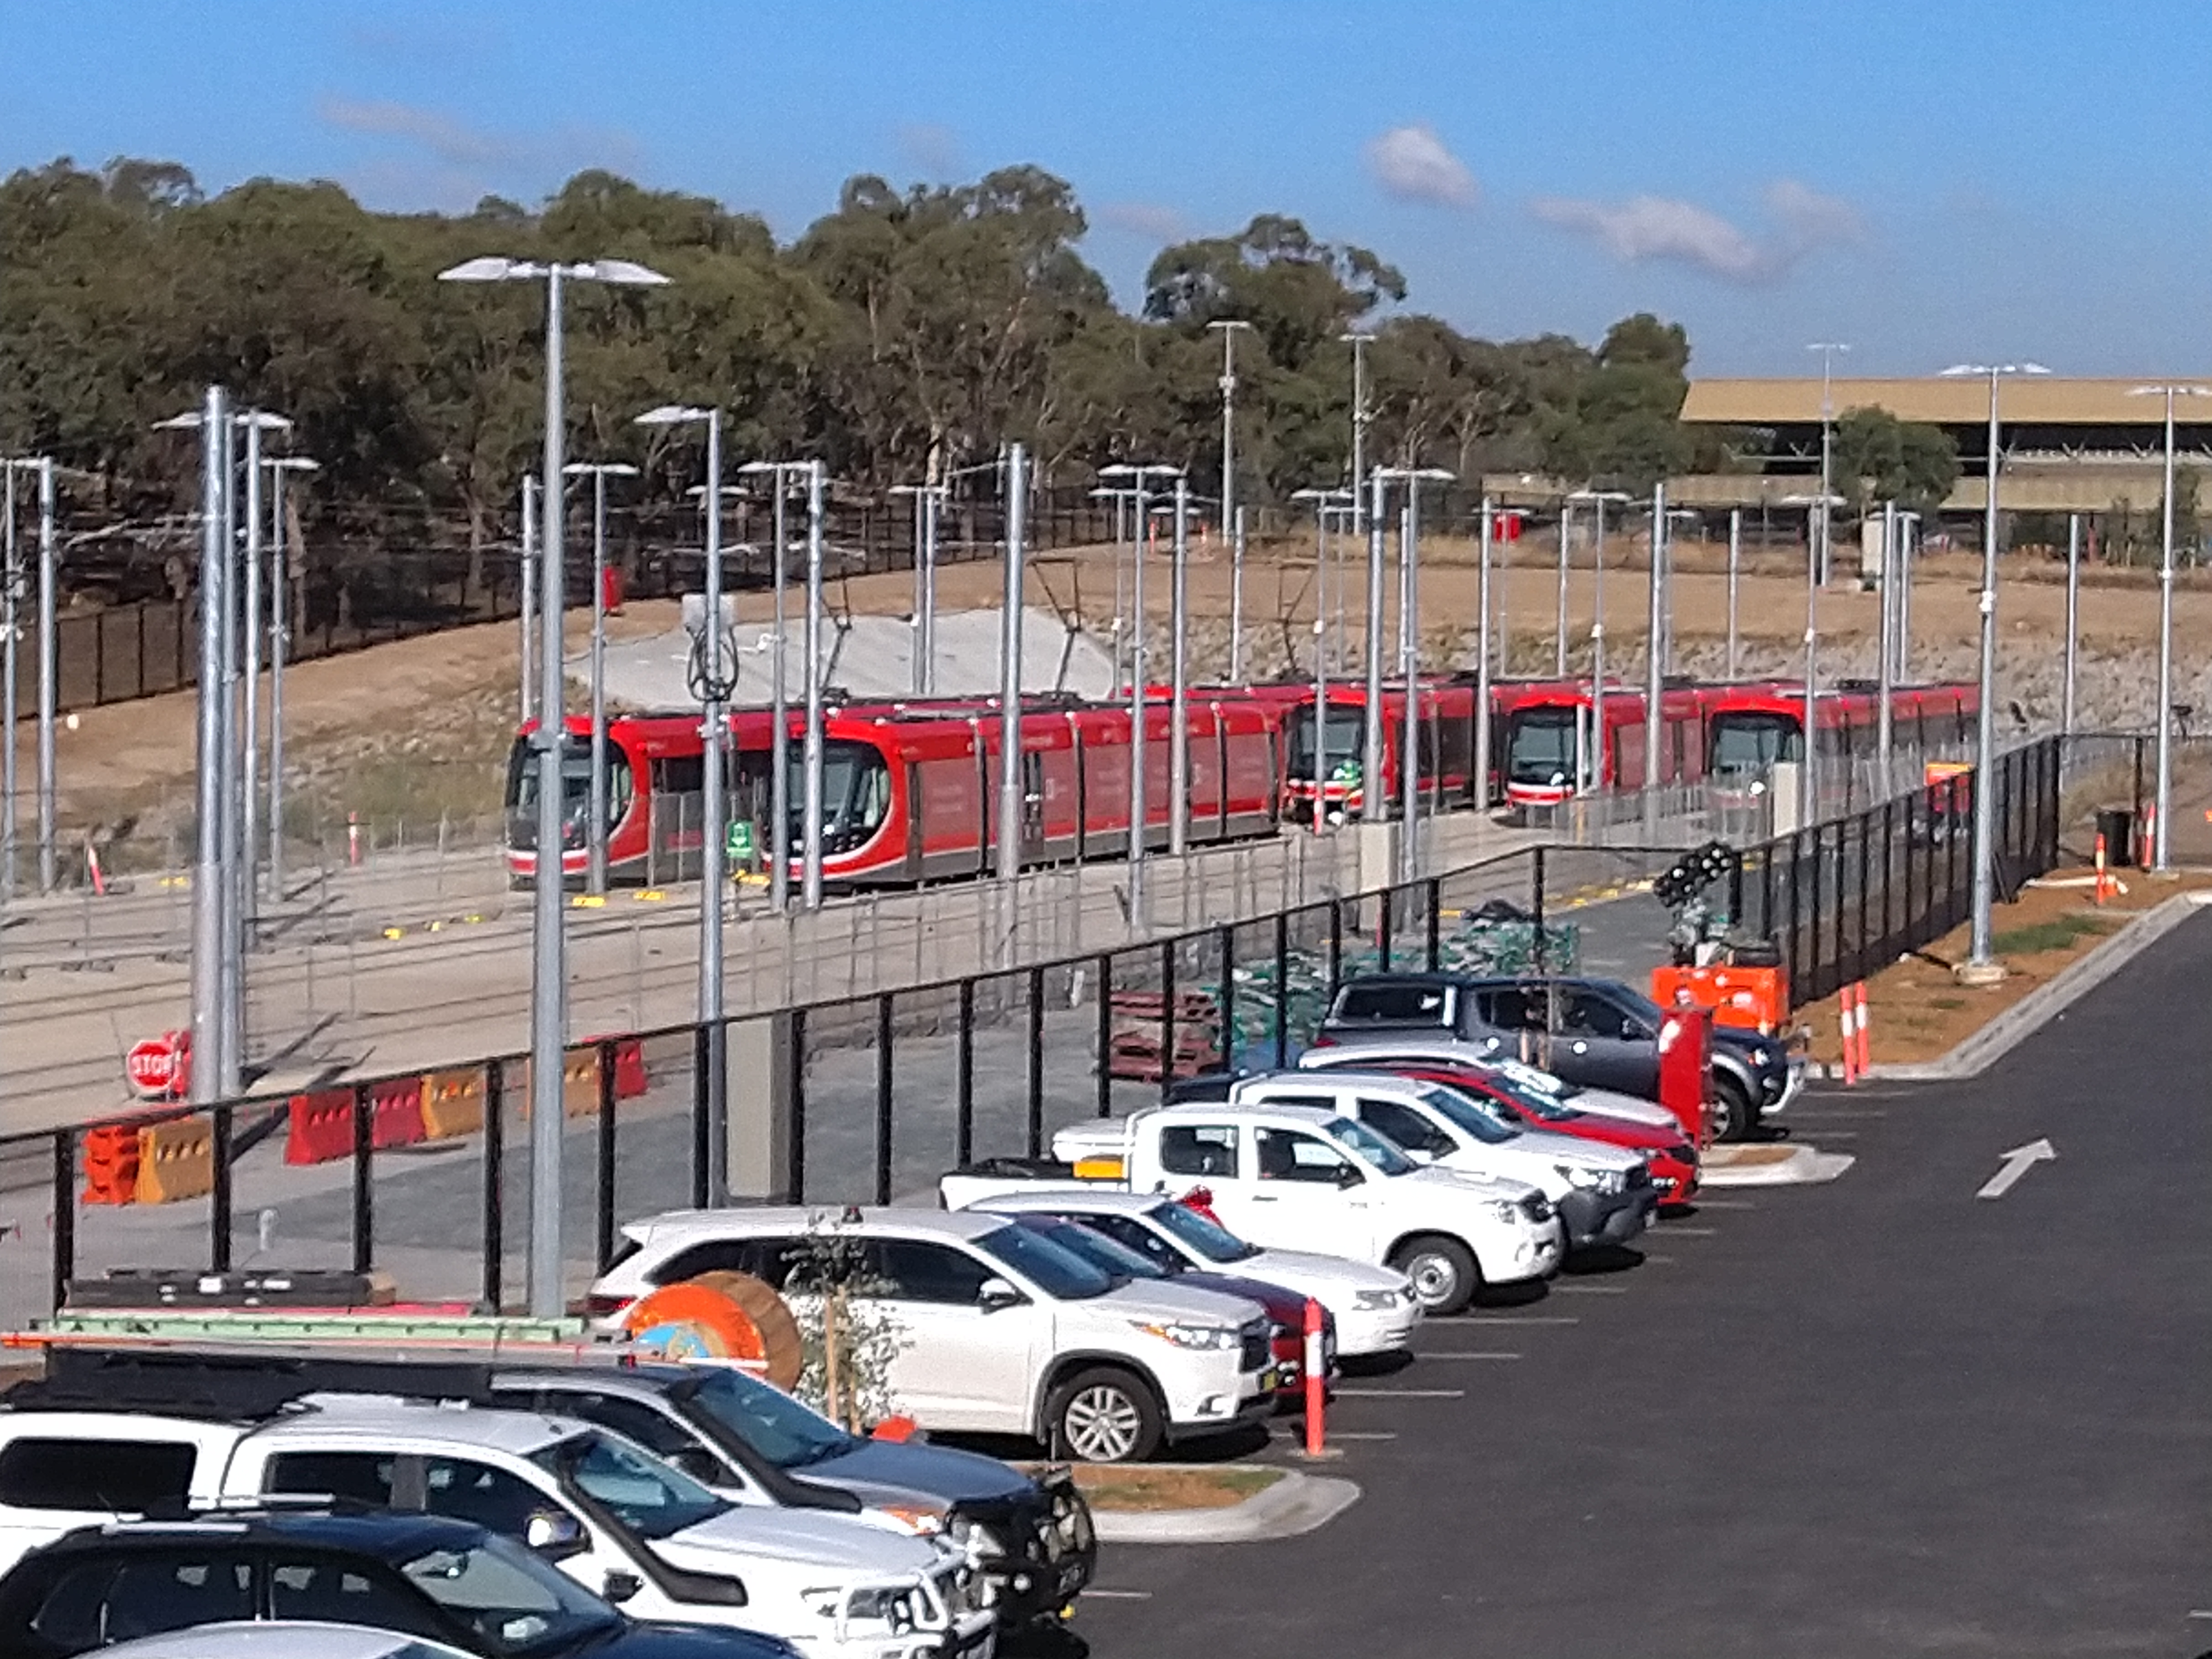 Canberra Metro Mitchell Depot light rail vehicle railyard.